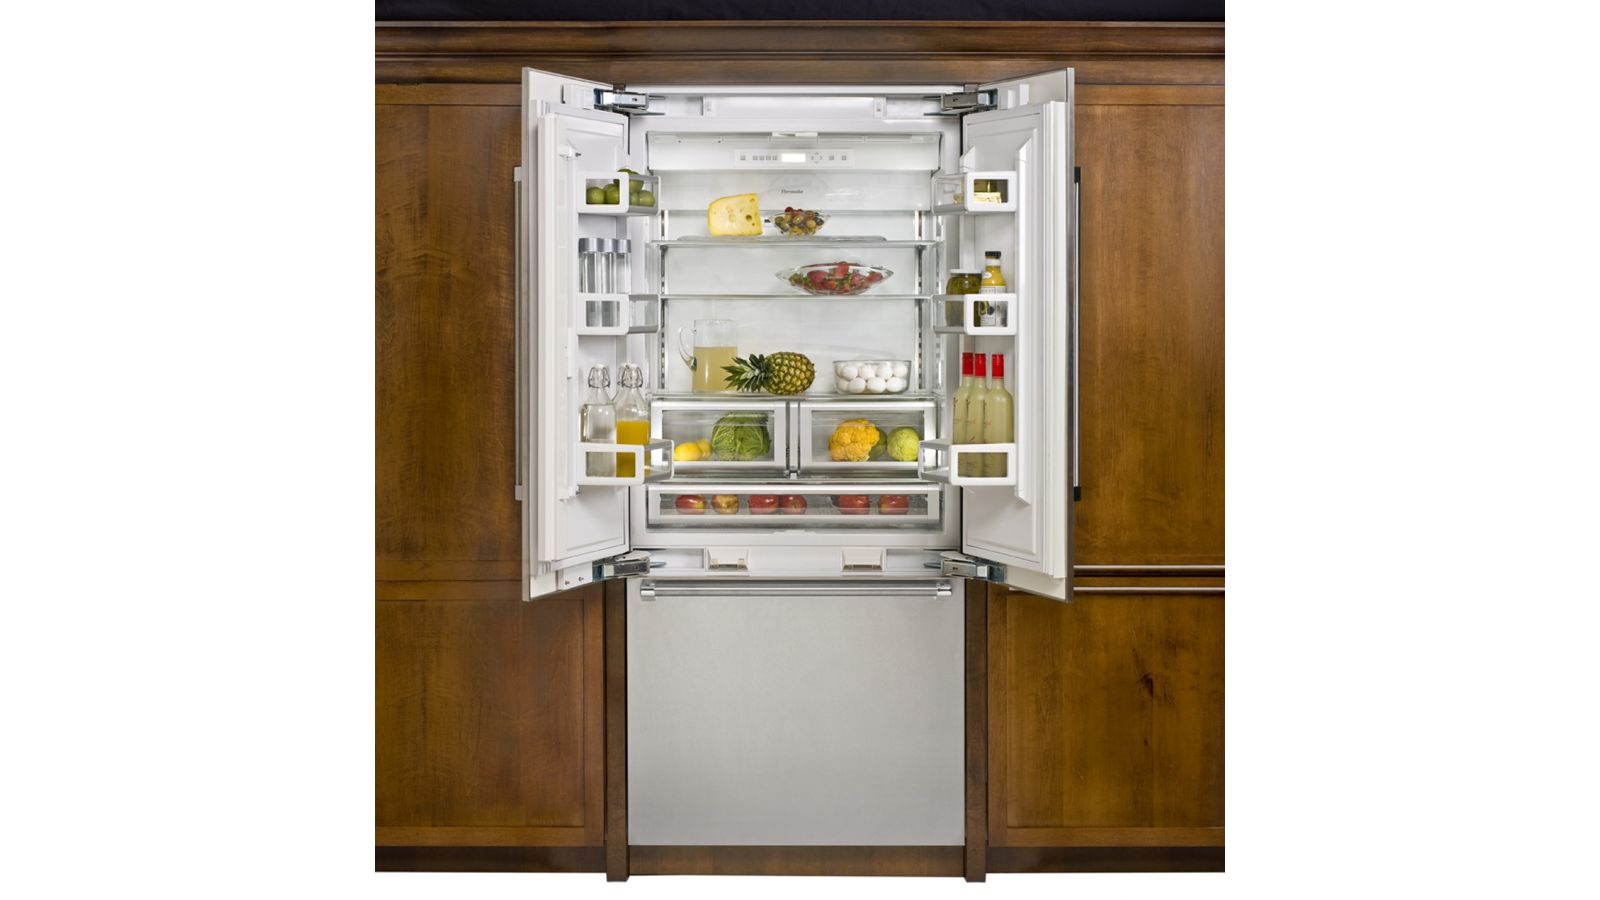 Thermador French Door Refrigerator